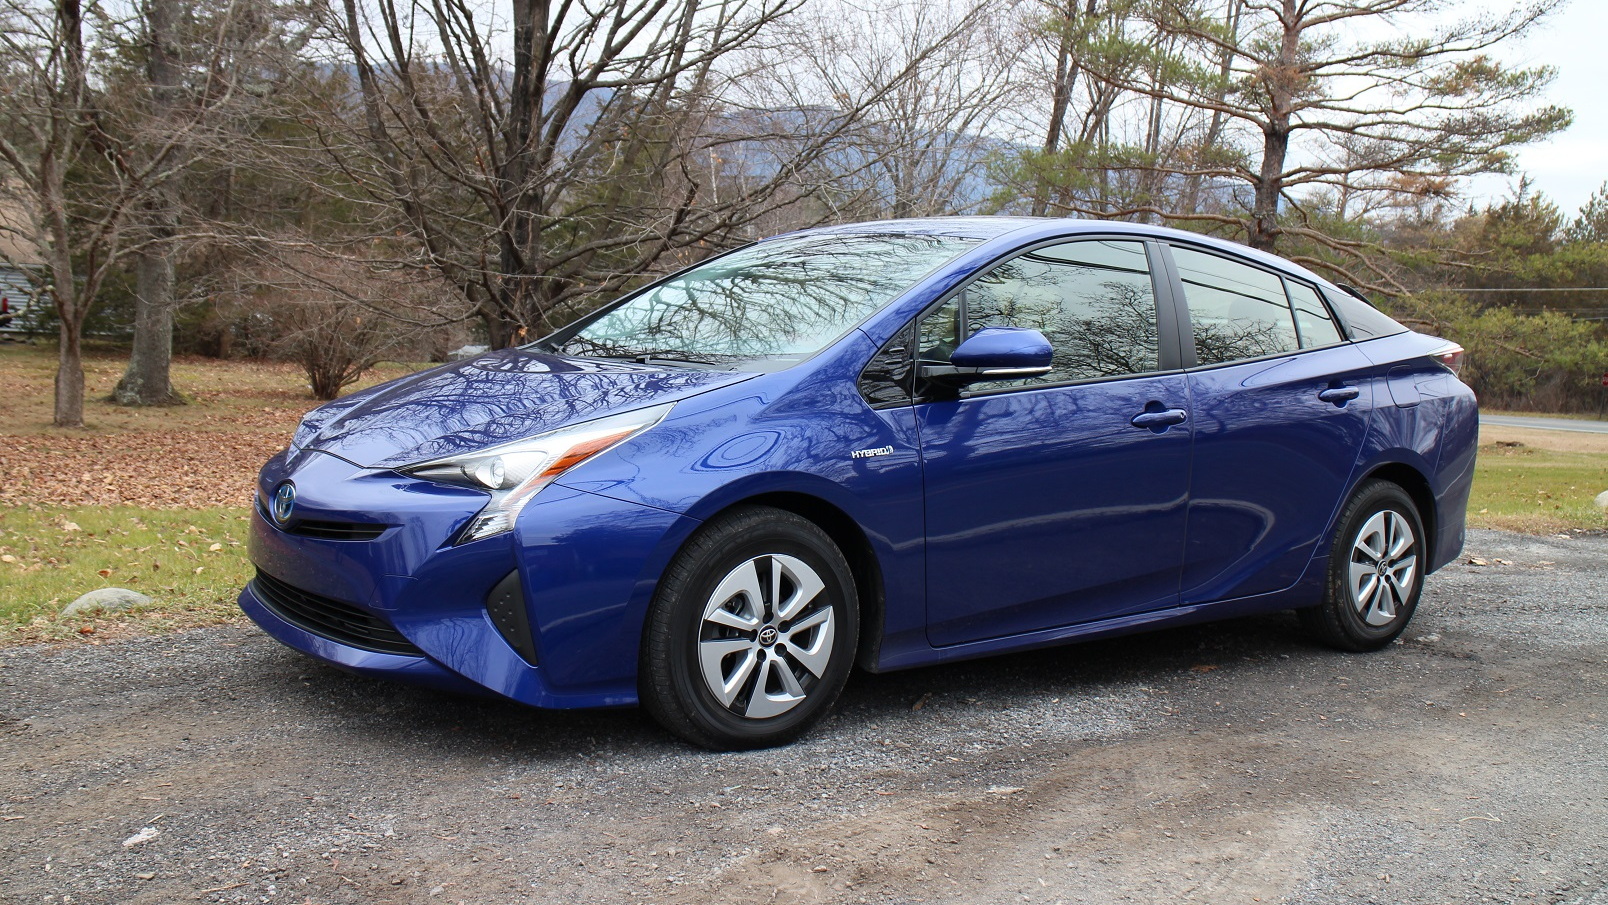 2016 Toyota Prius, Catskill Mountains, NY, Dec 2015